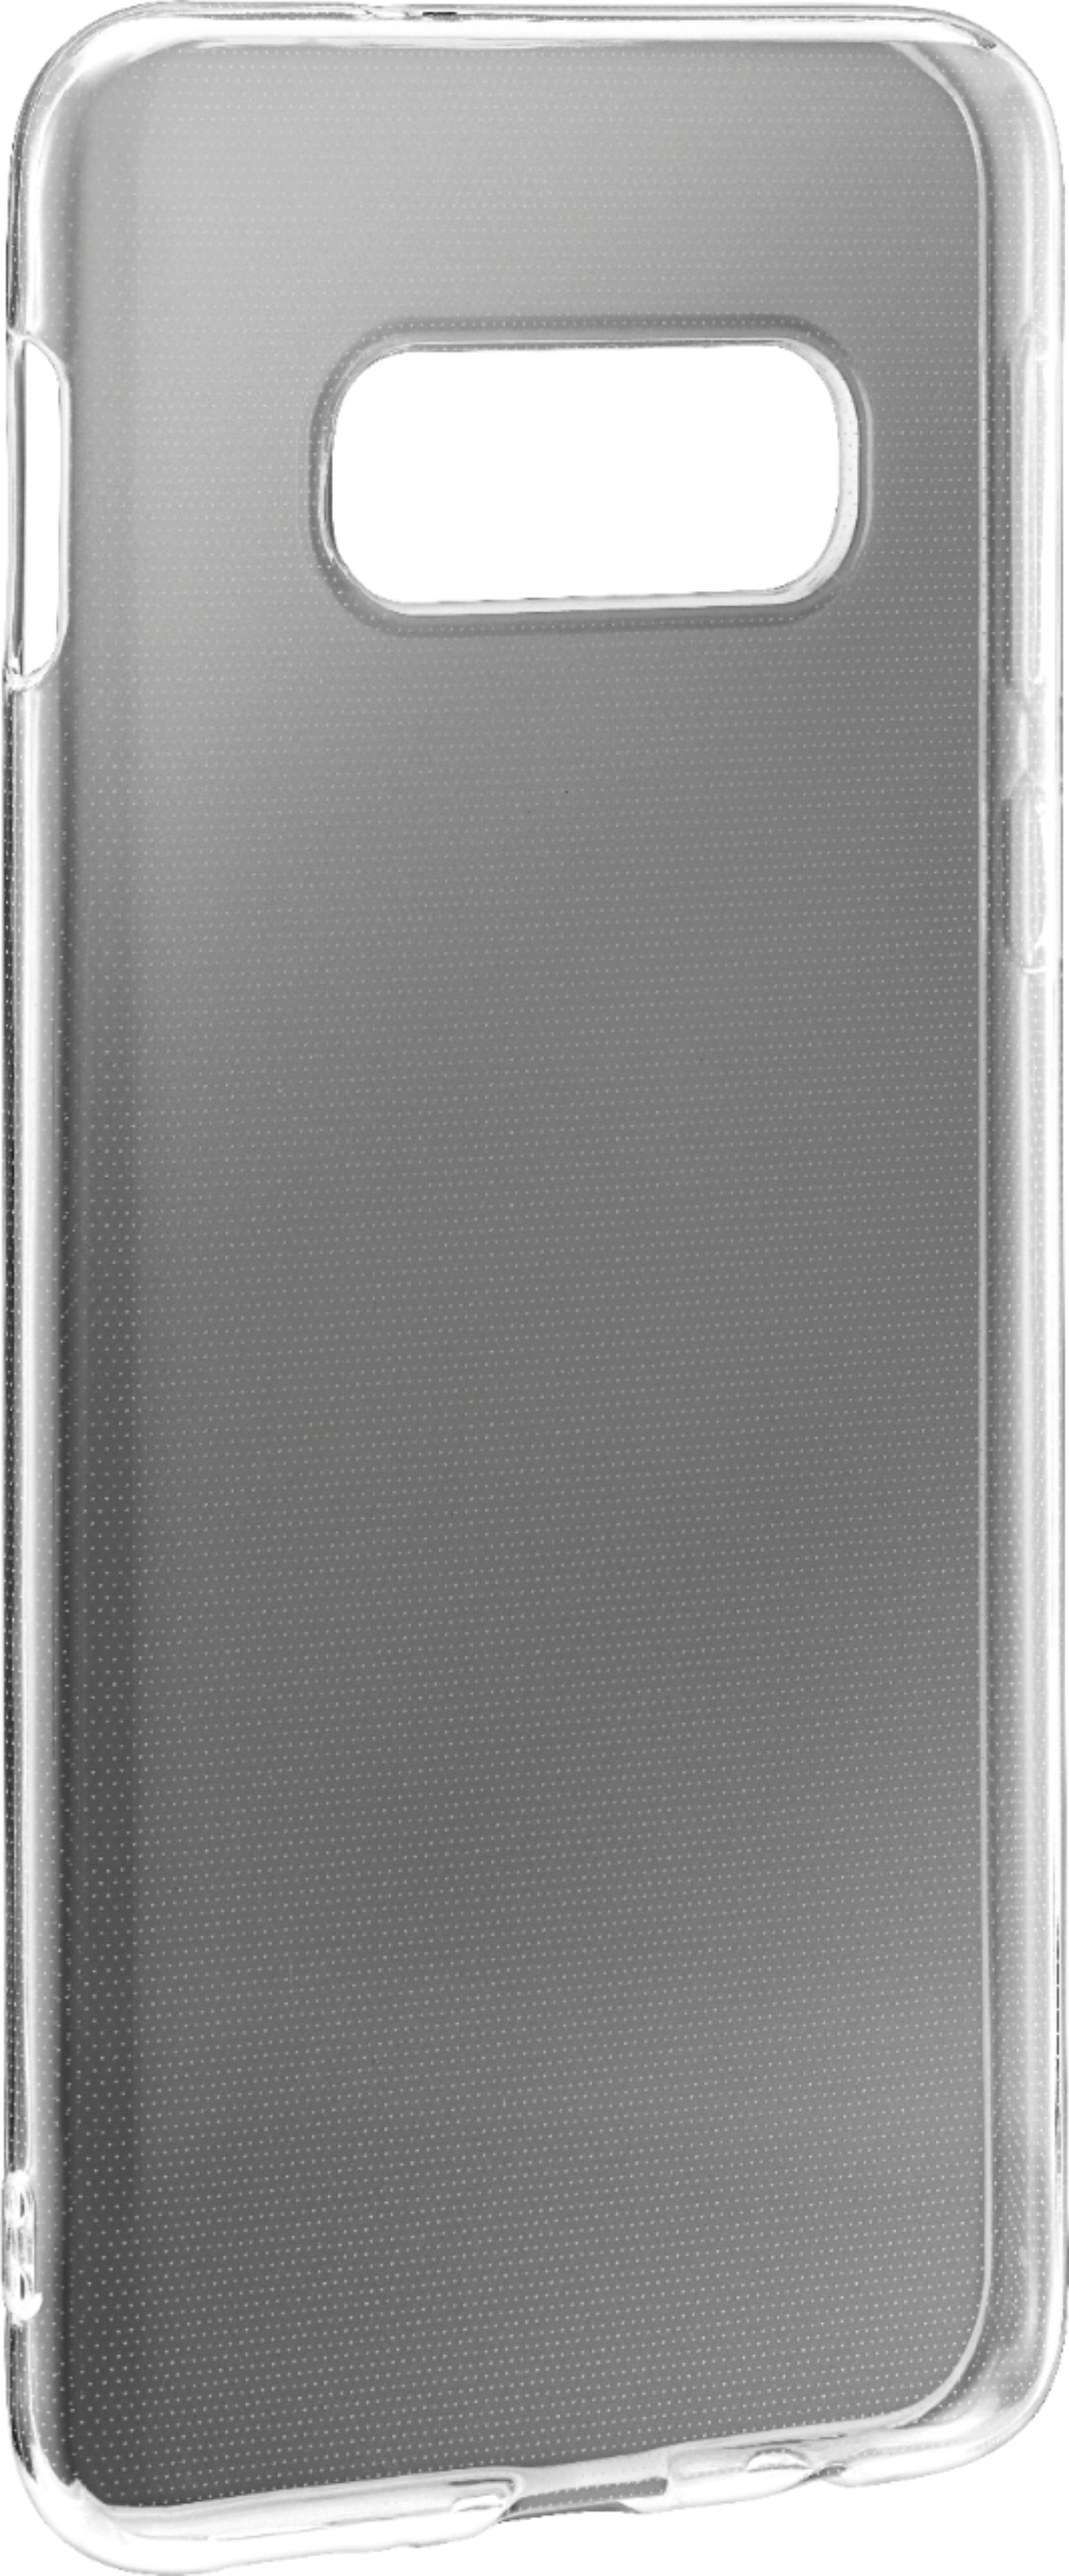 Angle View: Dynex™ - Case for Samsung Galaxy S10e - Semi-Clear